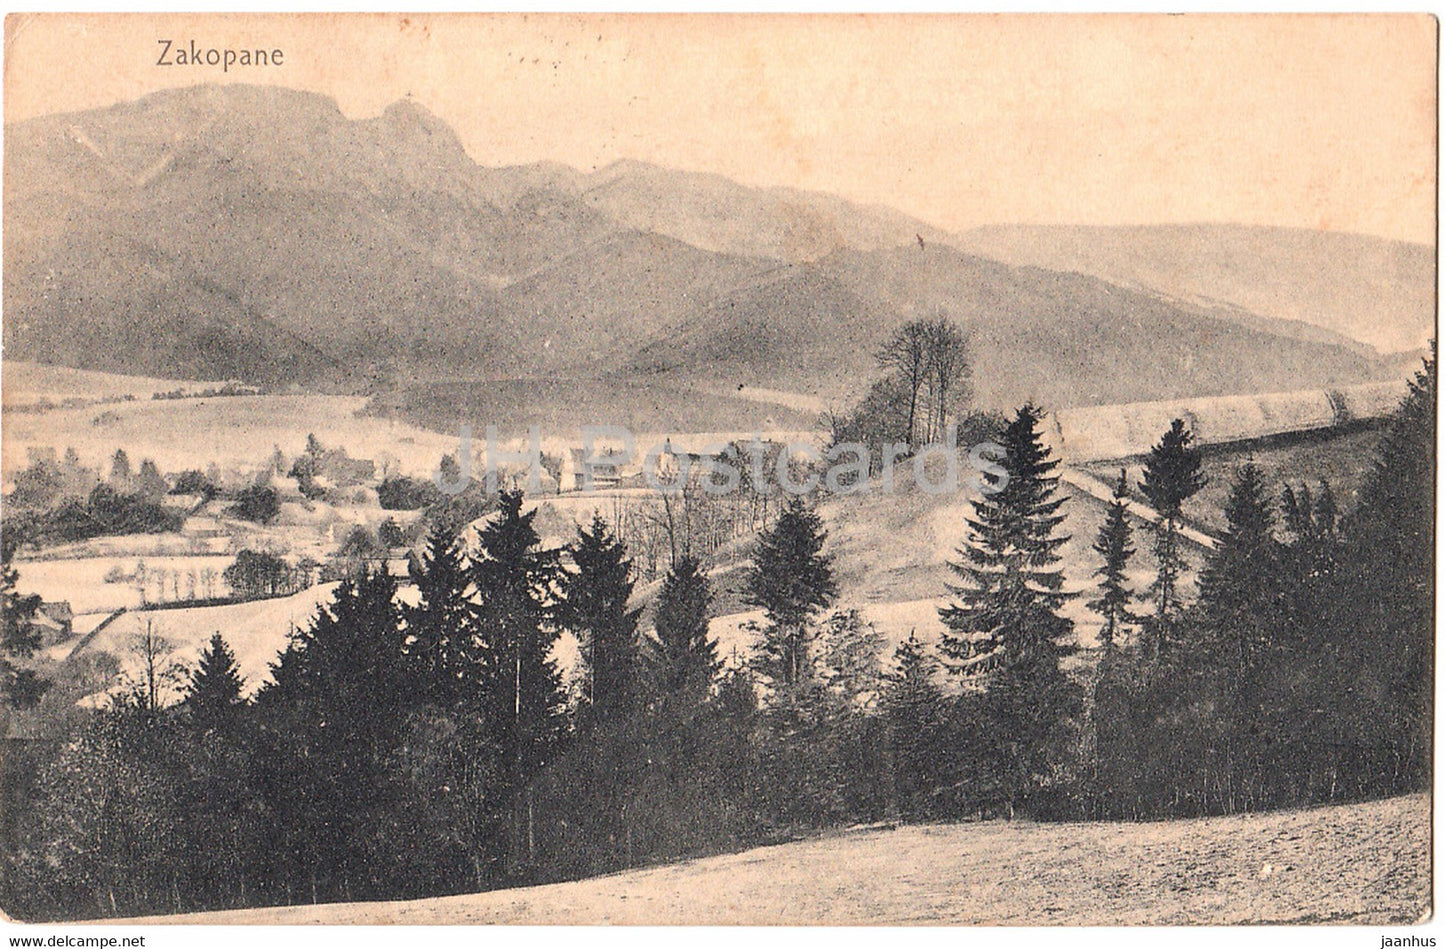 Zakopane - old postcard - 1907 - Poland - used - JH Postcards